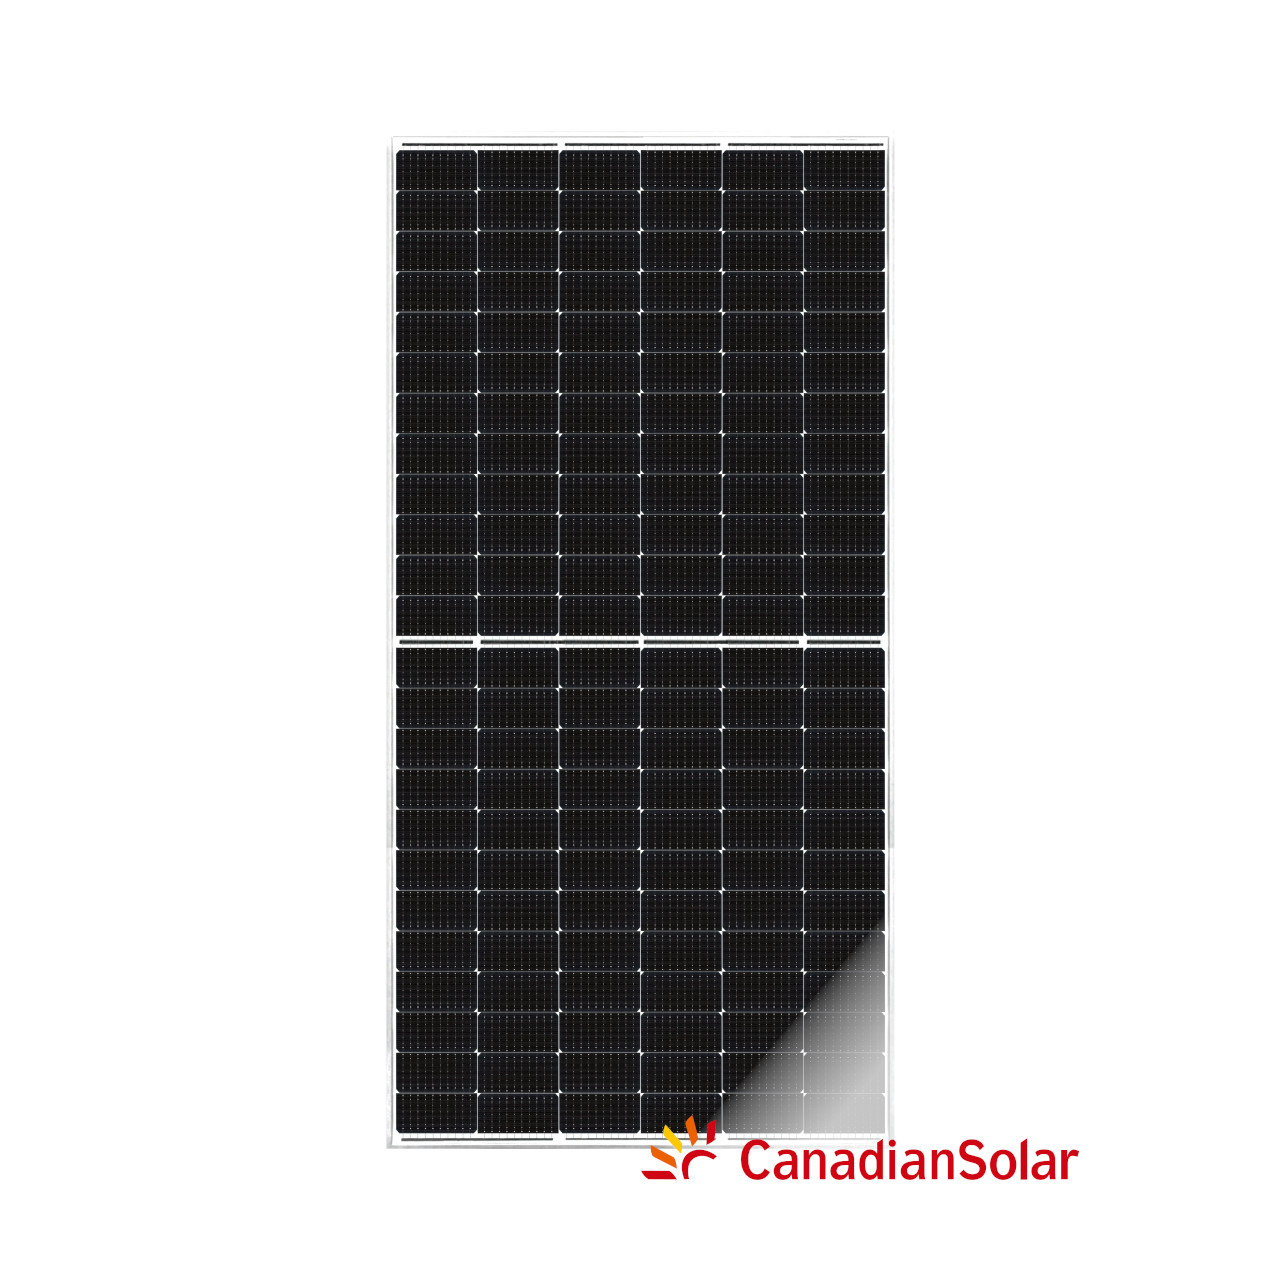 Canadian Solar - CSI - CS6W-535MB-AG  - Front